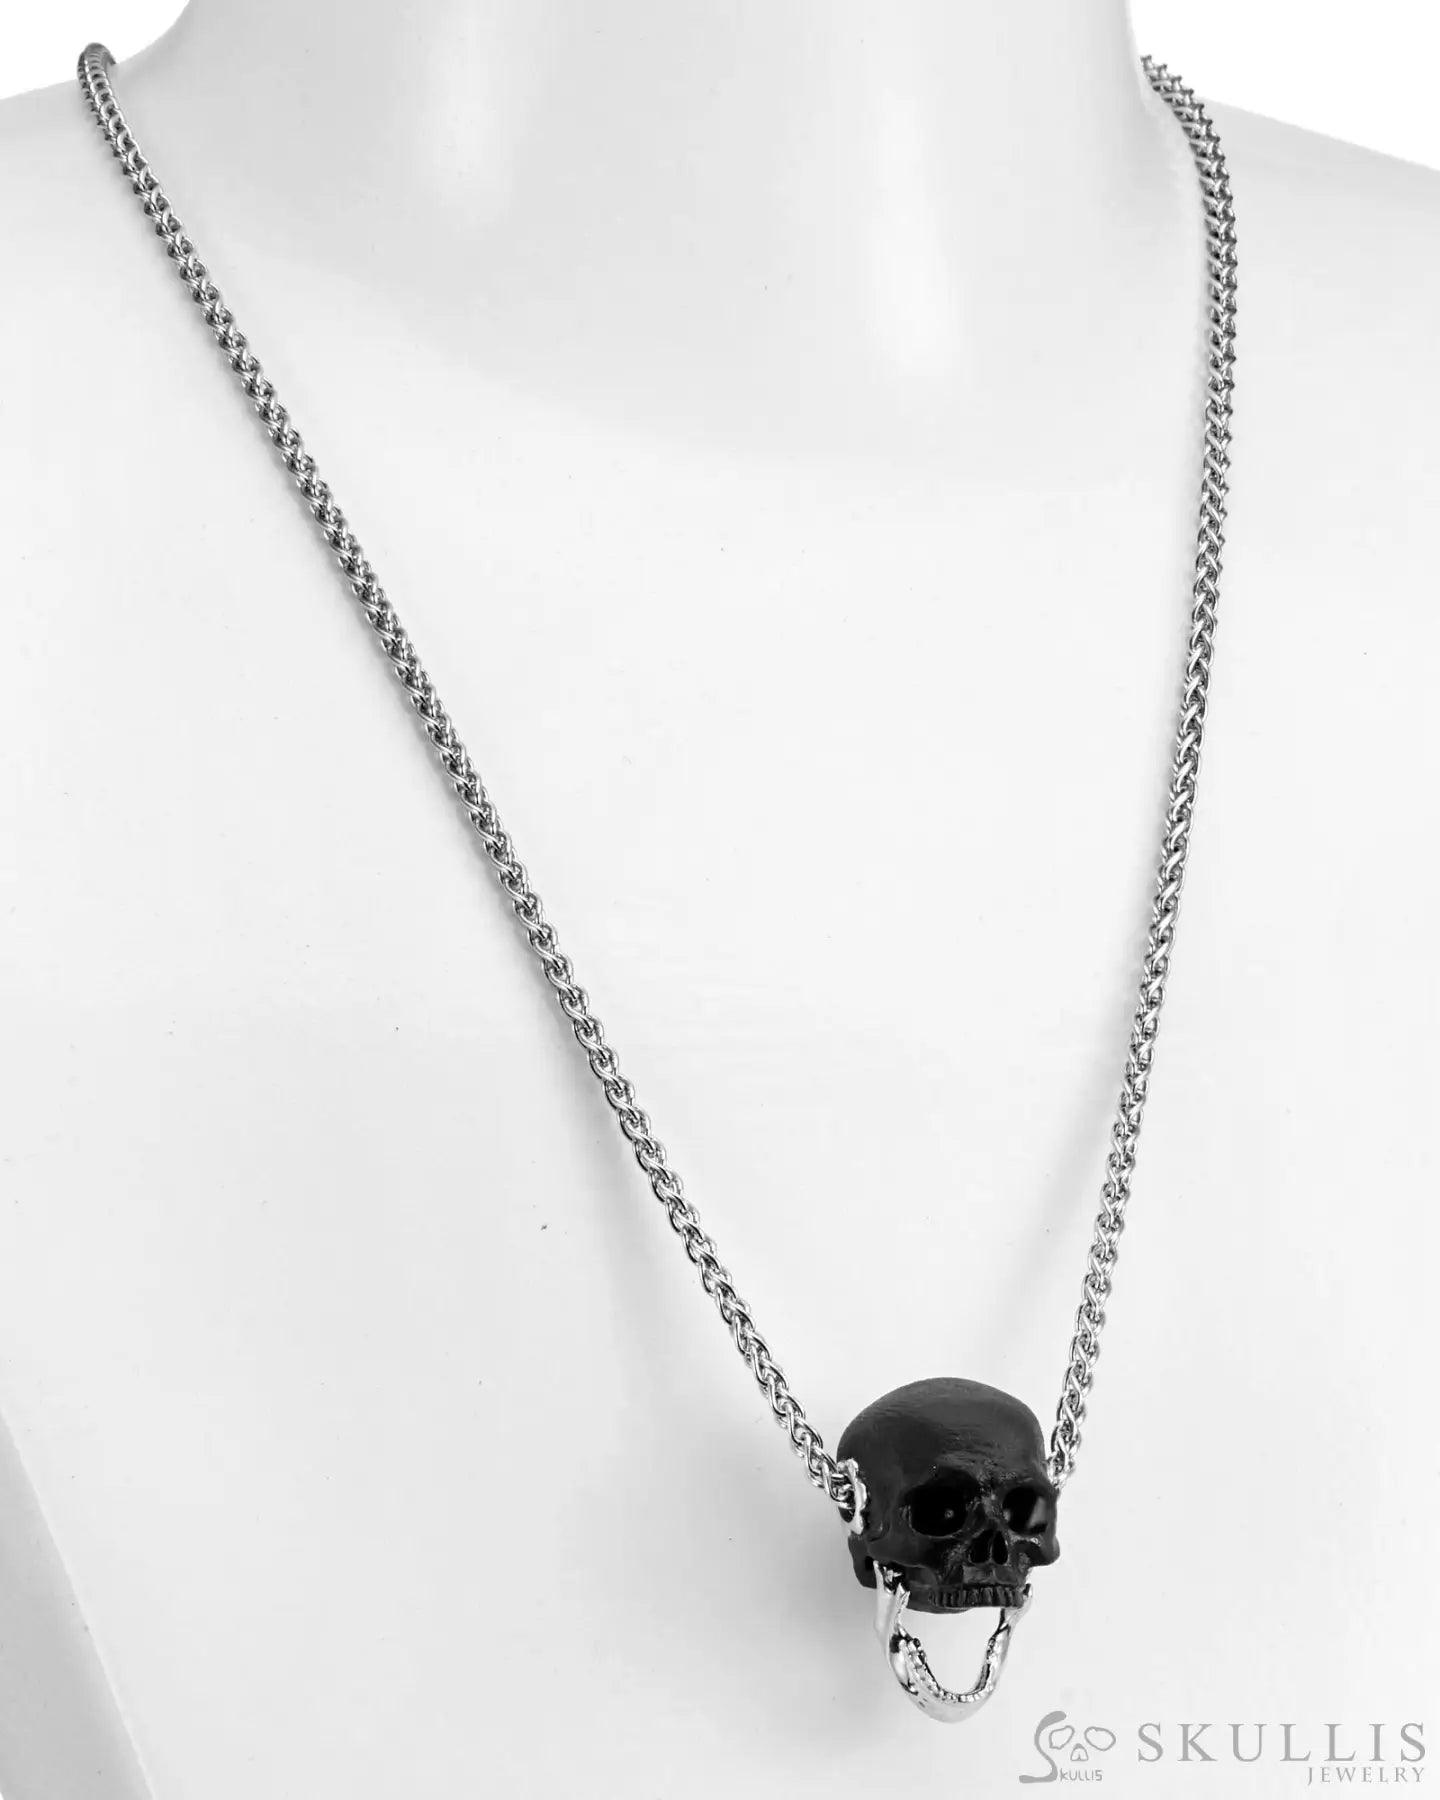 Gem Skull Pendant Necklace Of  Frosted Black Obsidian Crystal Carved Skull With Detachable